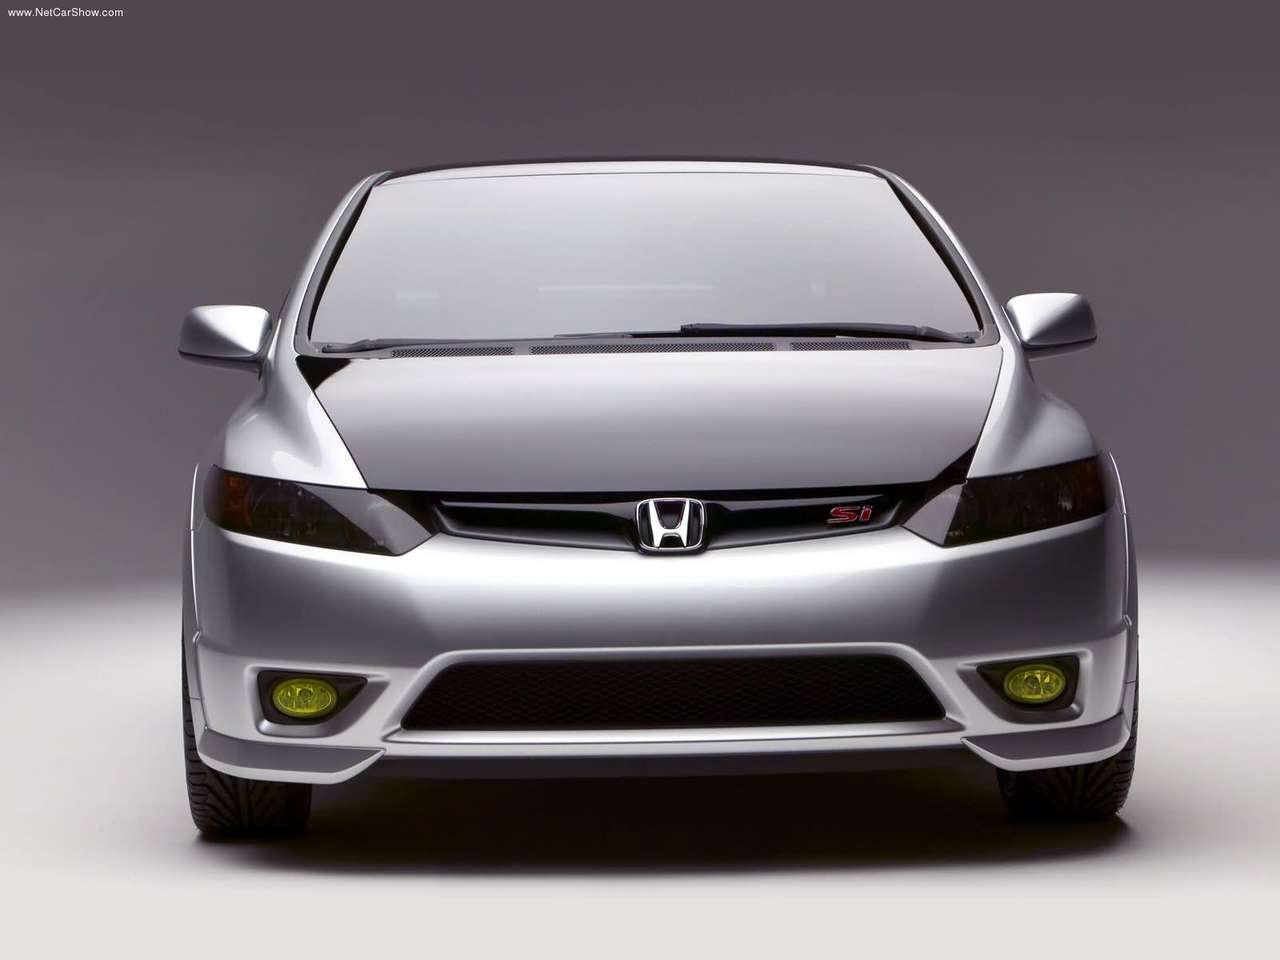 Honda Civic Si By Wallpaper Picswallpaper